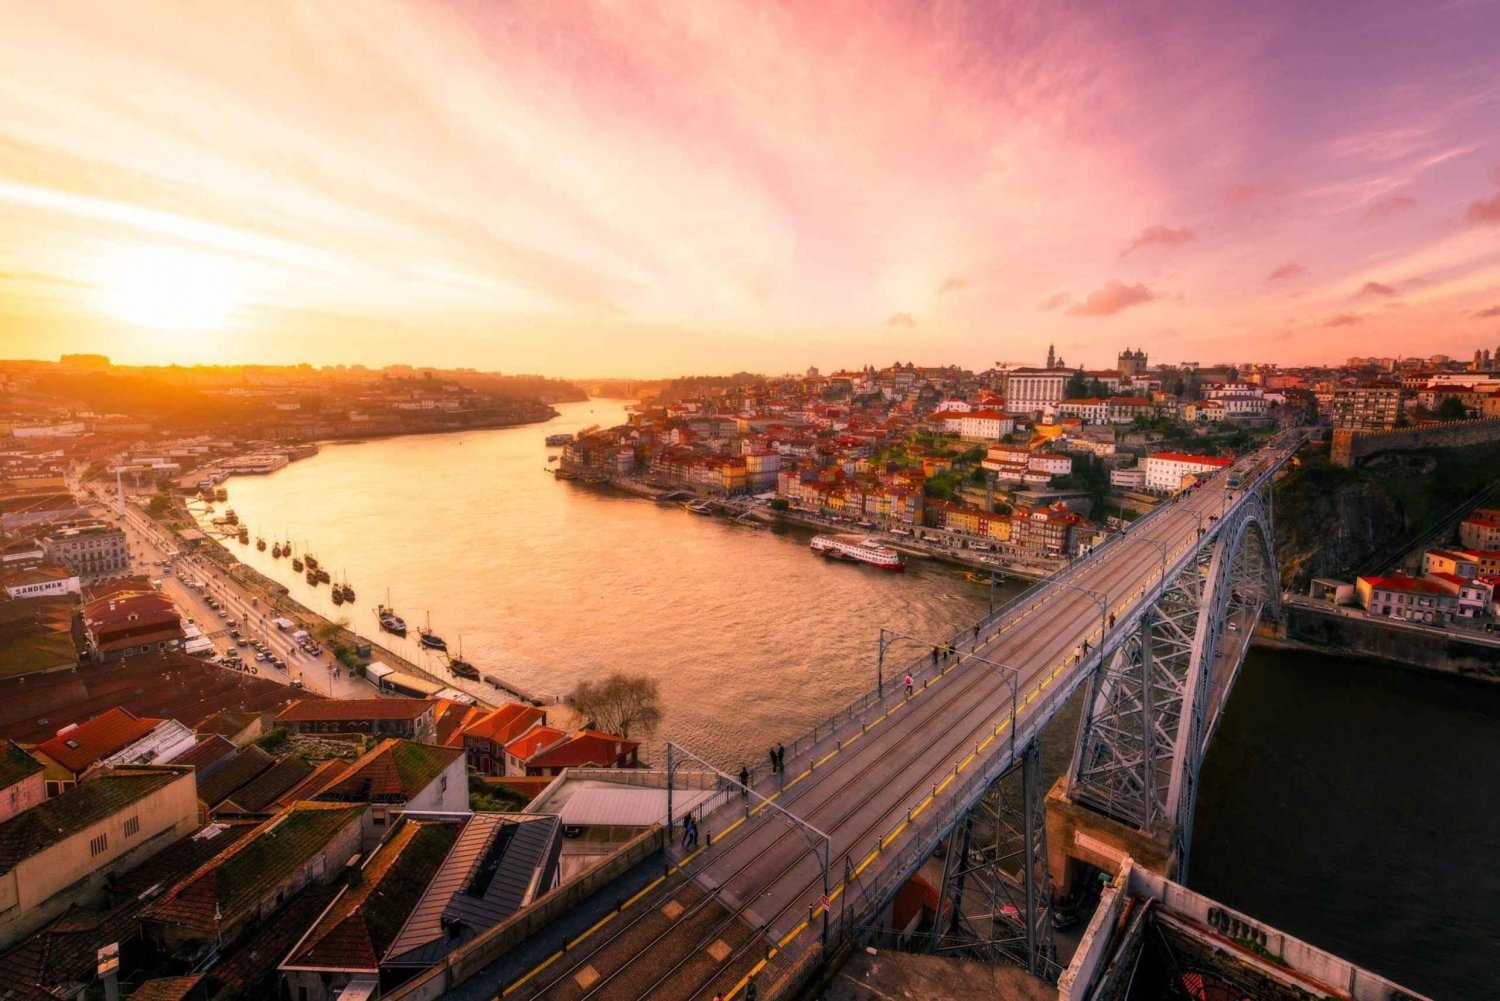 Podróżuj z Porto do Lizbony, doliny Douro oraz Bragi i Guimaraes